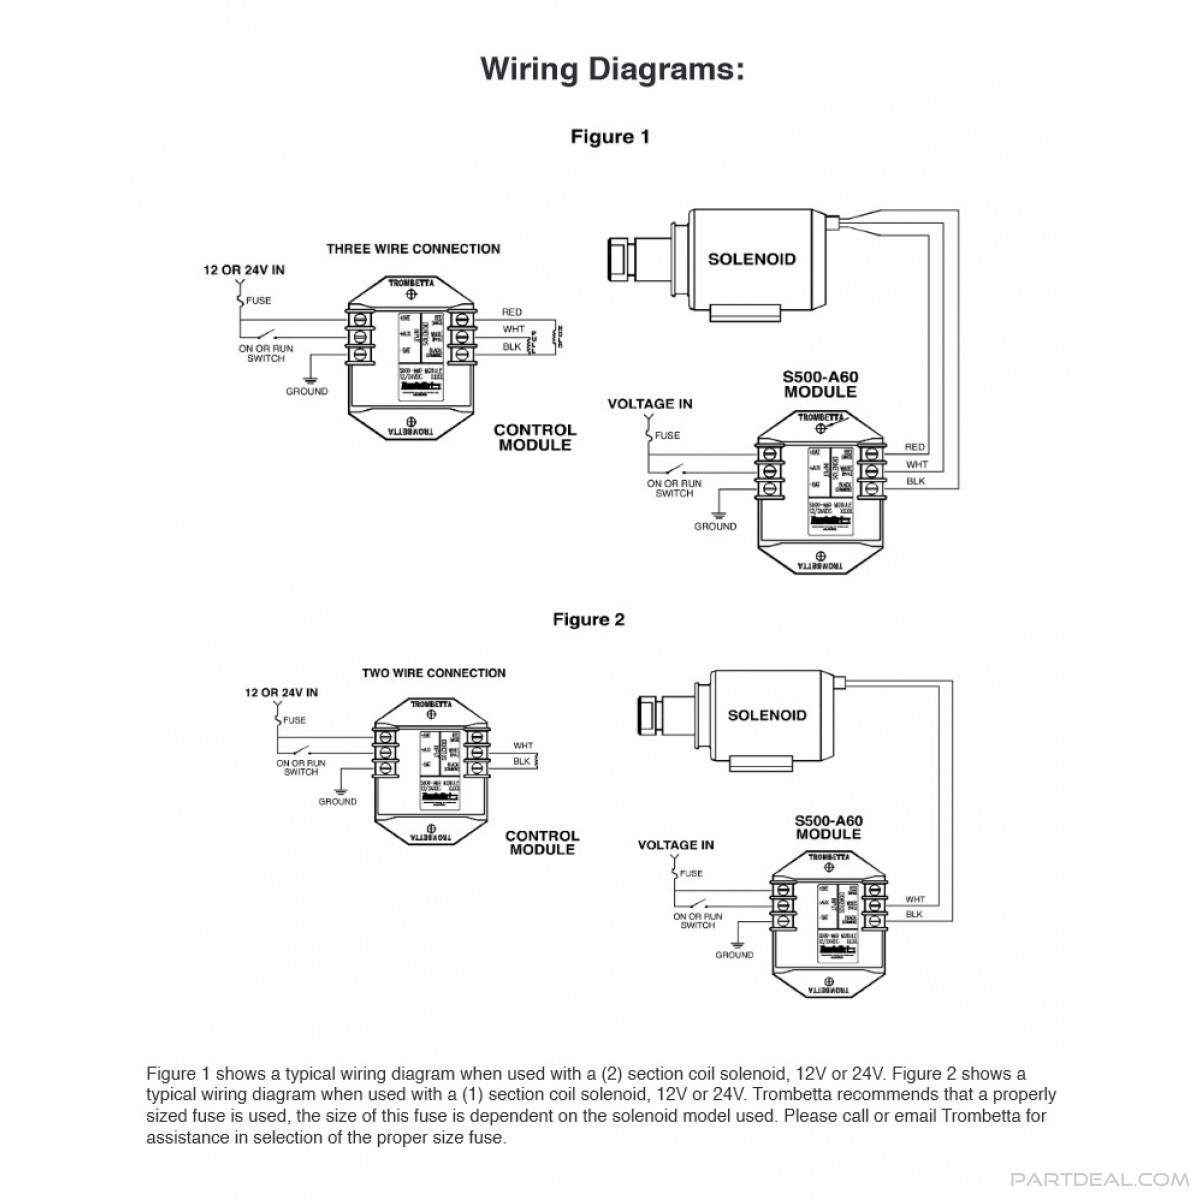 Trombetta Solenoid Wiring Diagram - Electrical Schematic Wiring - Trombetta Solenoid Wiring Diagram